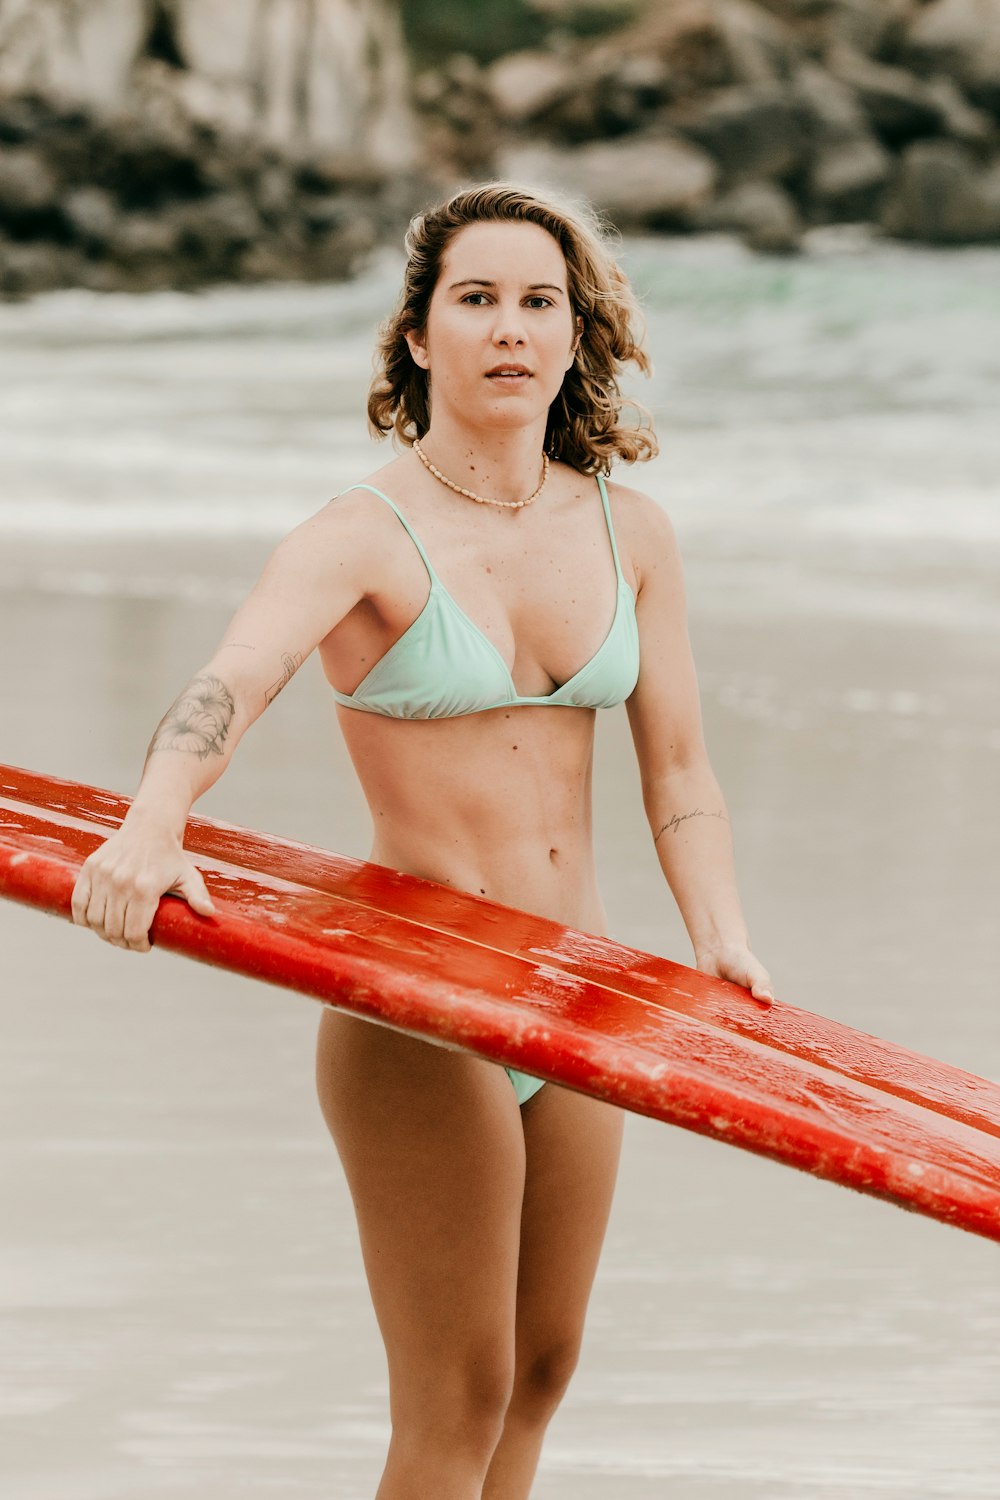 woman in white bikini standing on red surfboard